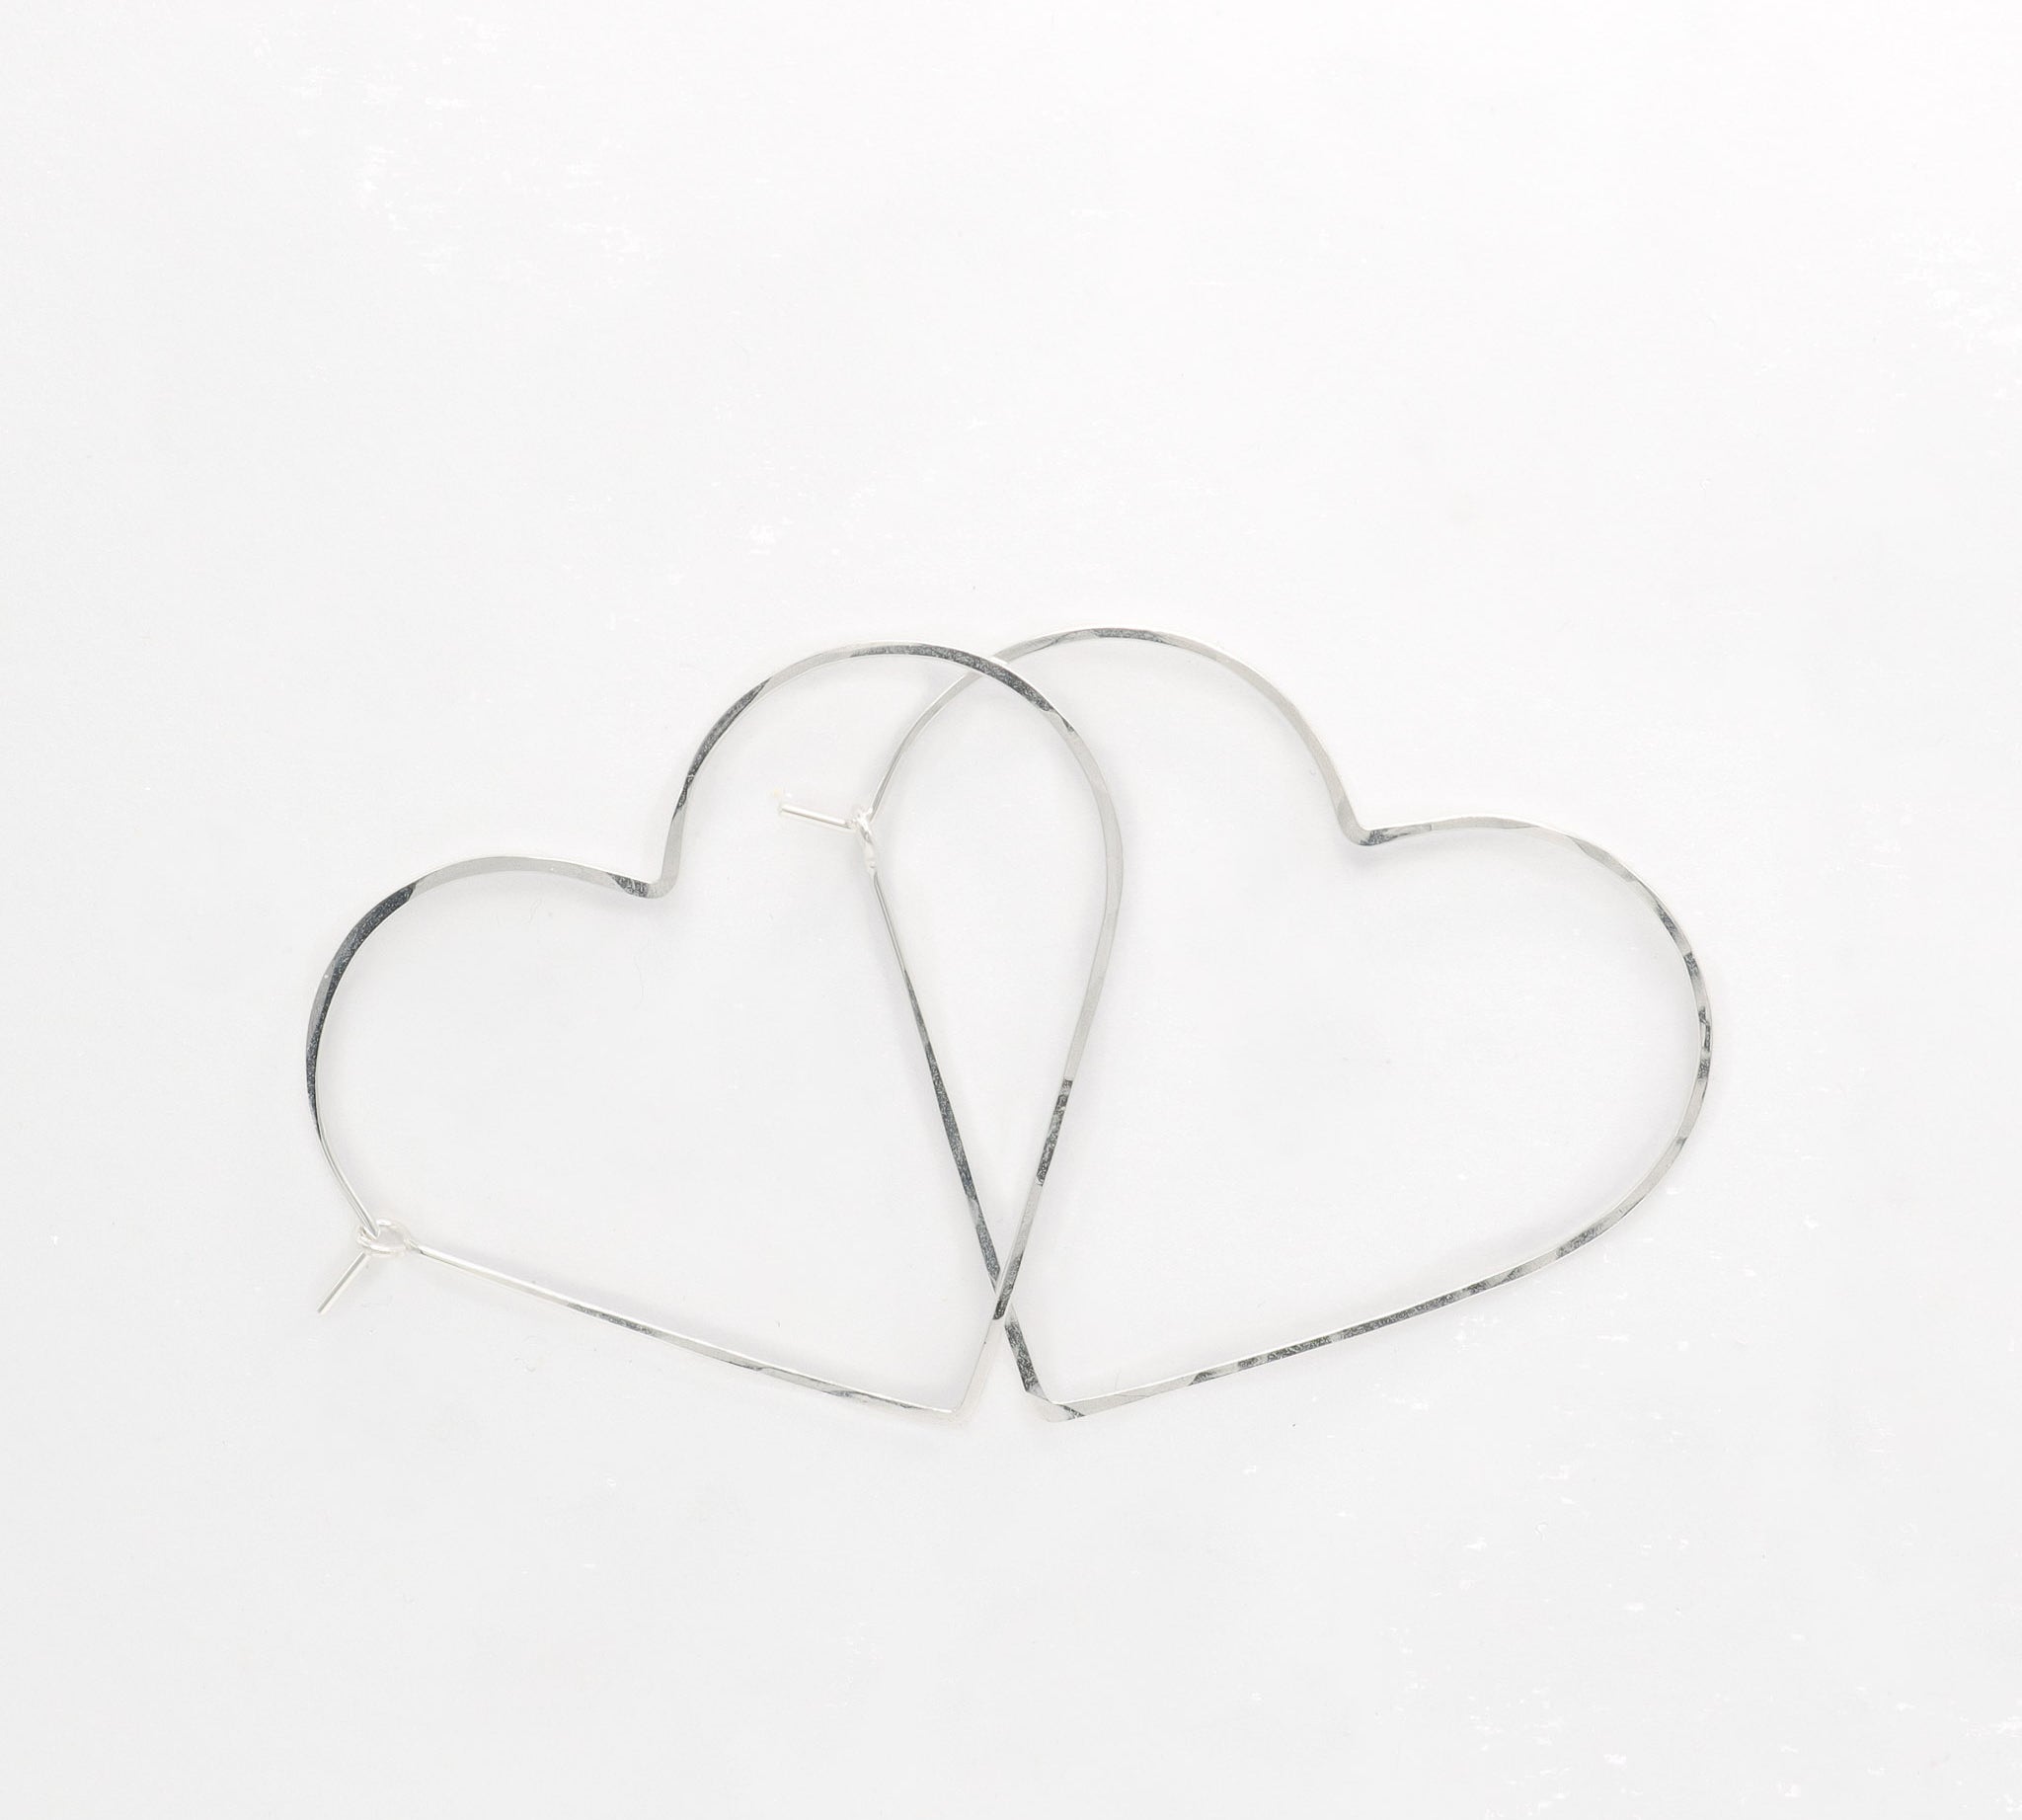 Silver Heart Hoop Earrings, featured image